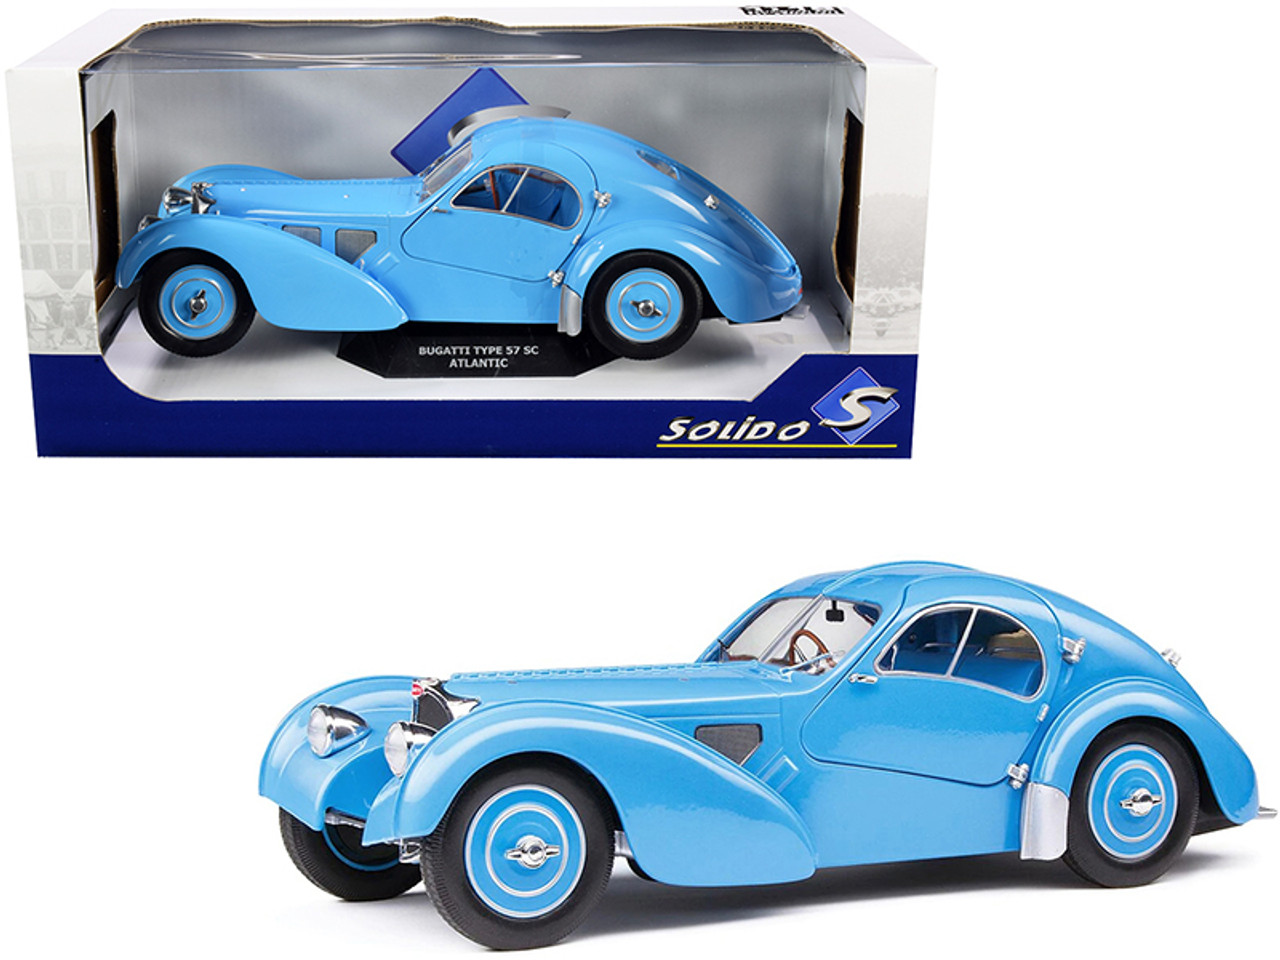 1937 Bugatti Type 57 SC Atlantic RHD (Right Hand Drive) Light Blue 1/18 Diecast Model Car by Solido